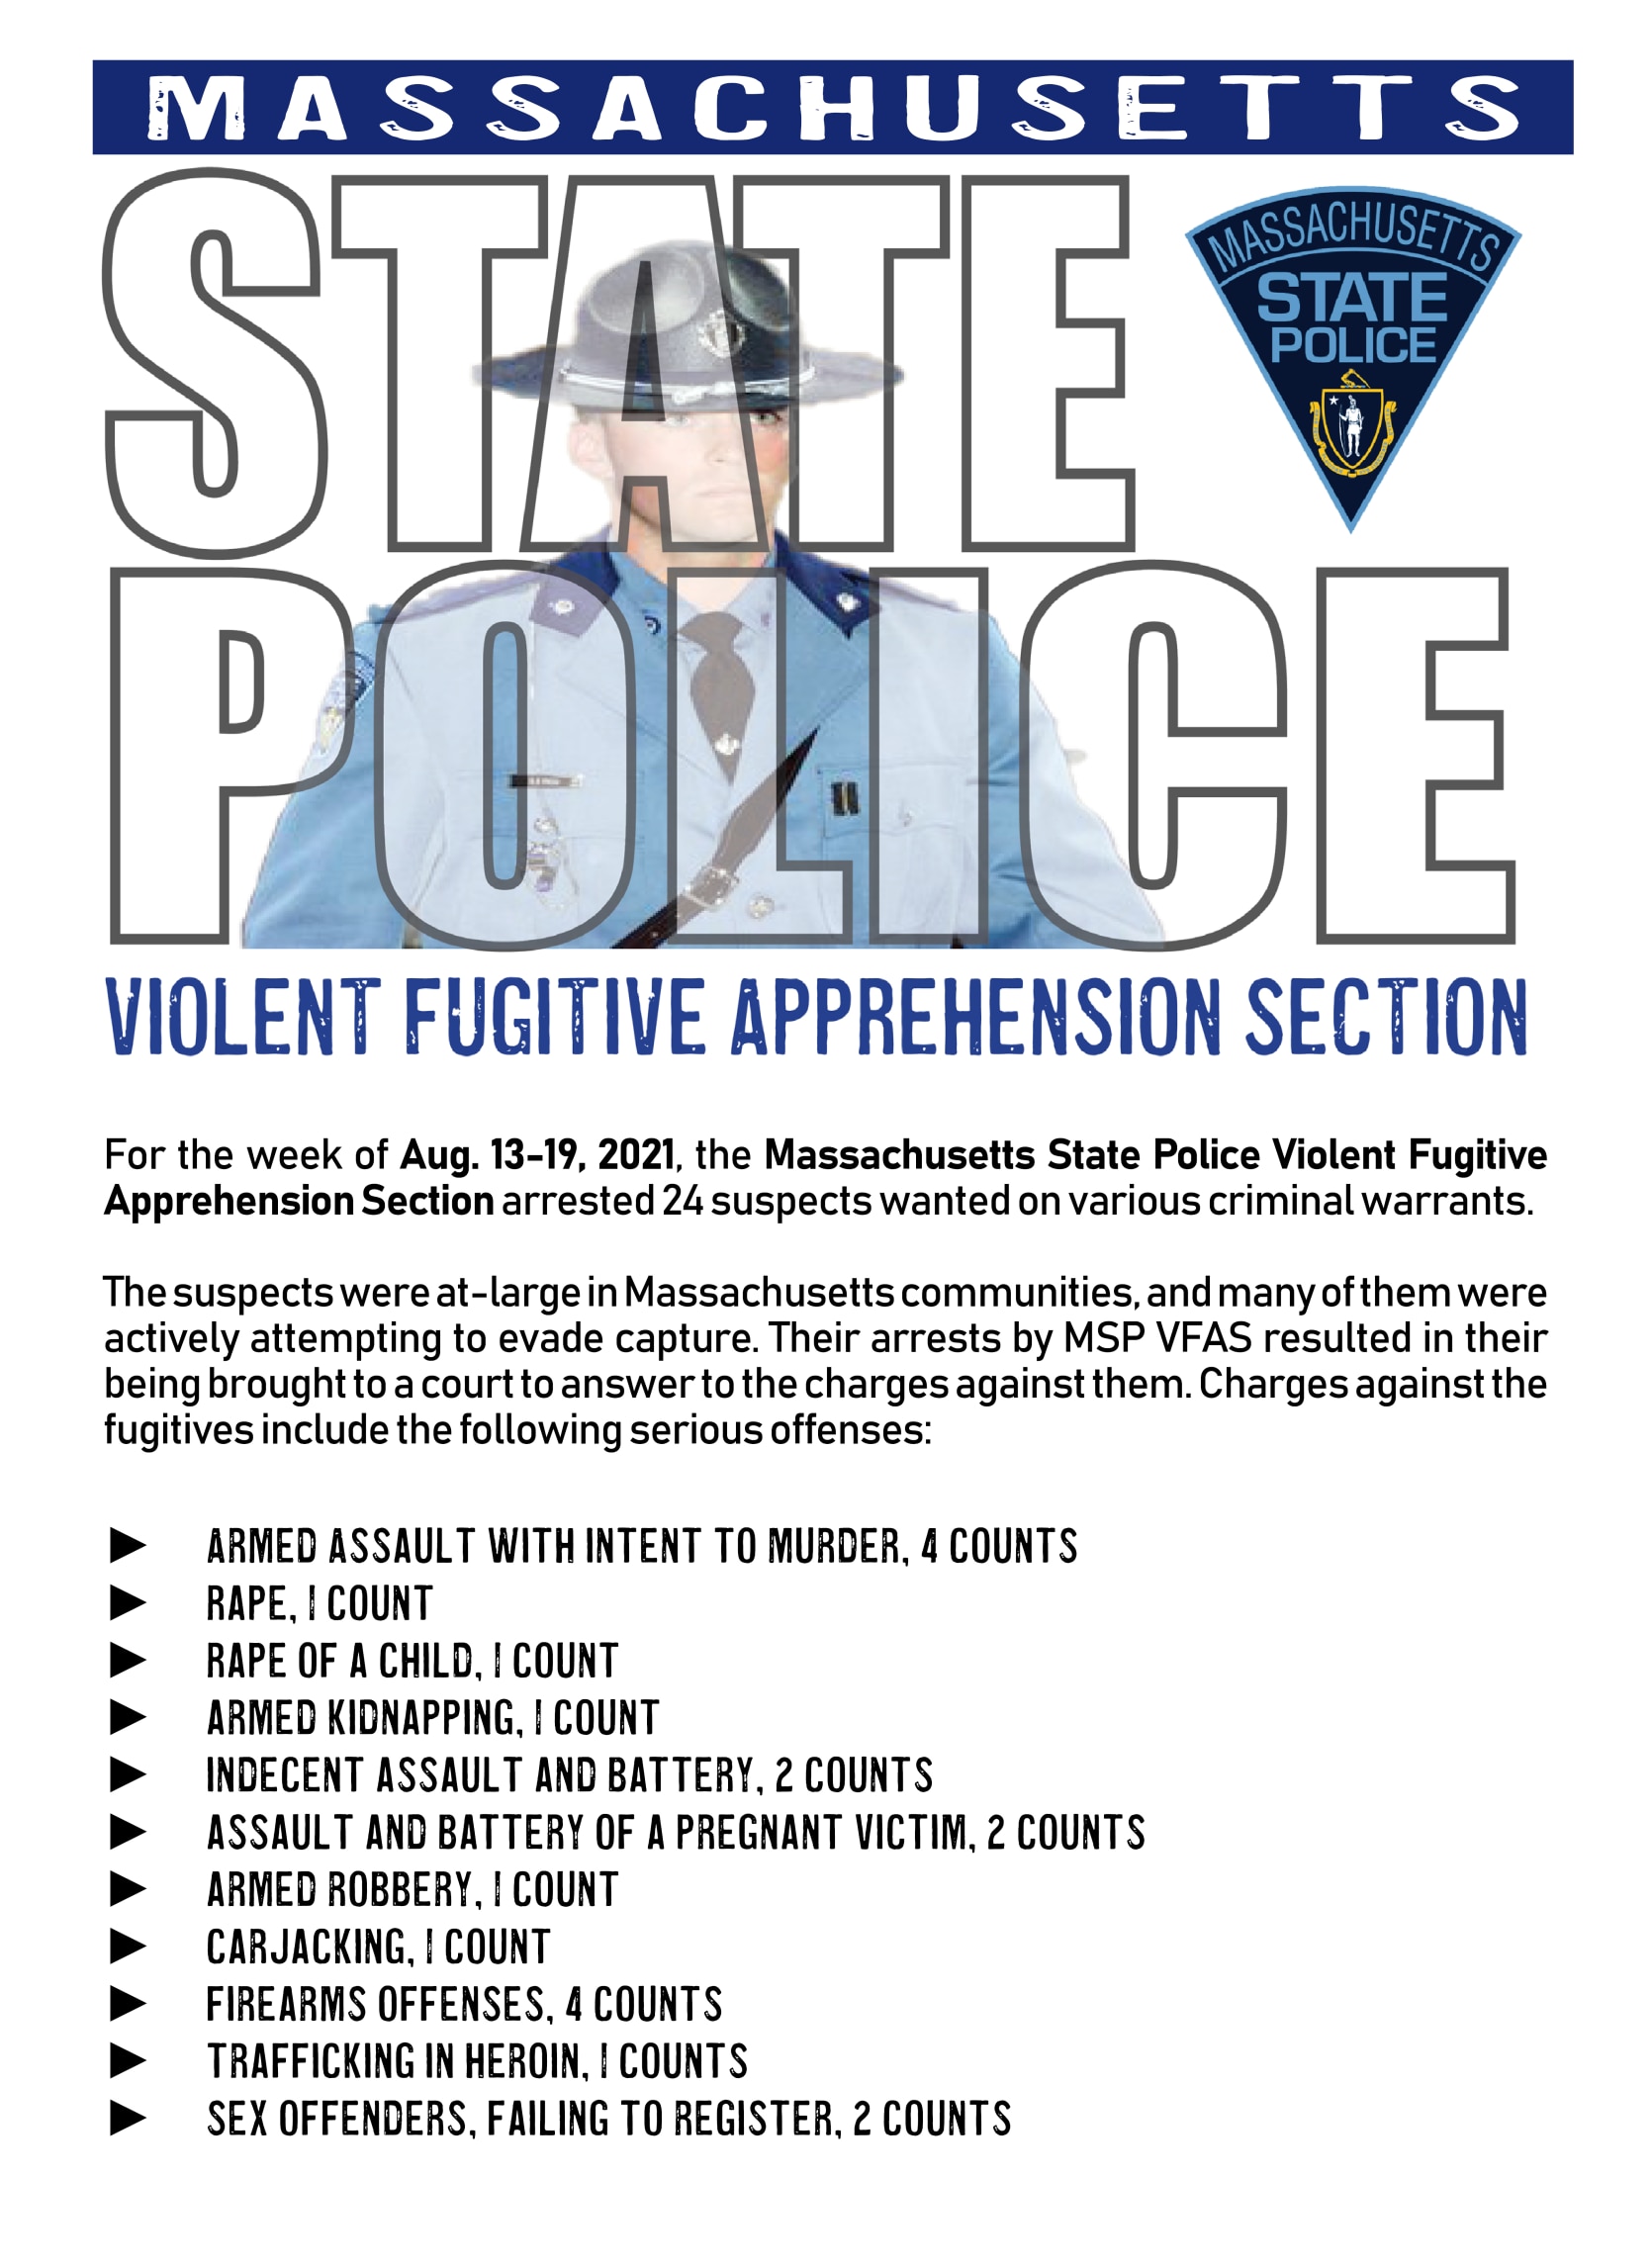 Massachusetts State Police Violent Fugitive Apprehension Section August 13-19, 2021